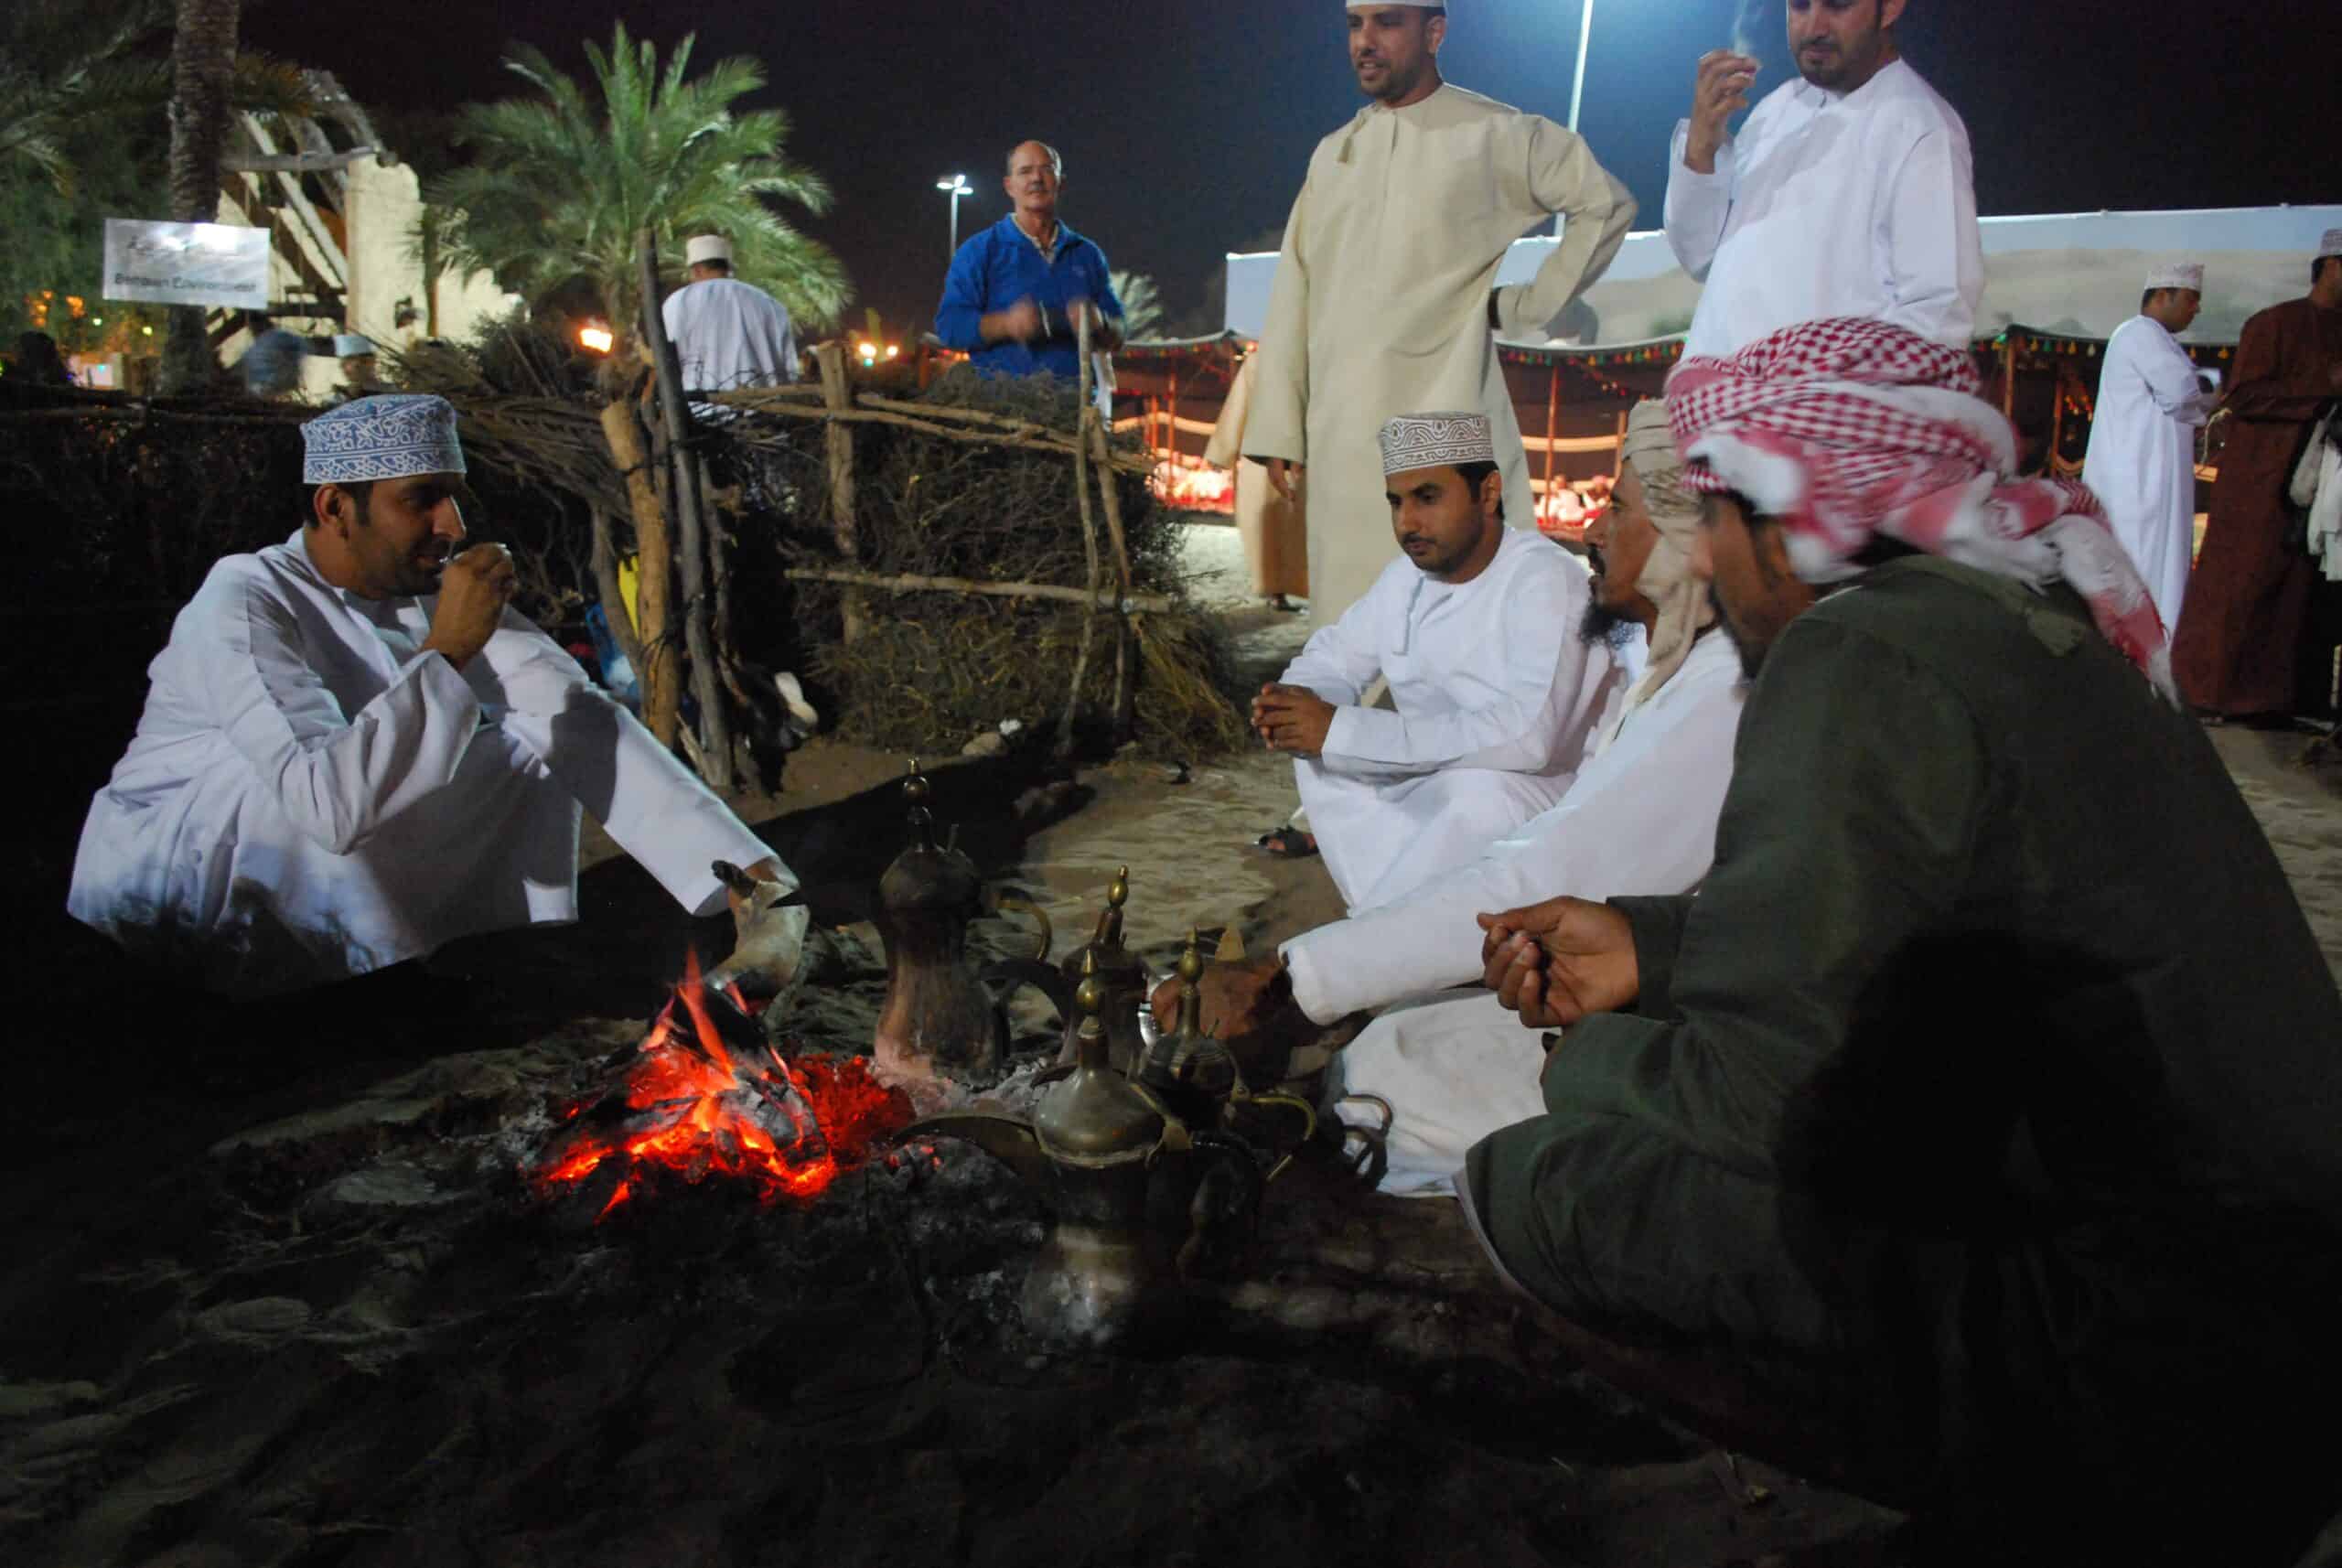 Omani men enjoying an evening in the soukh